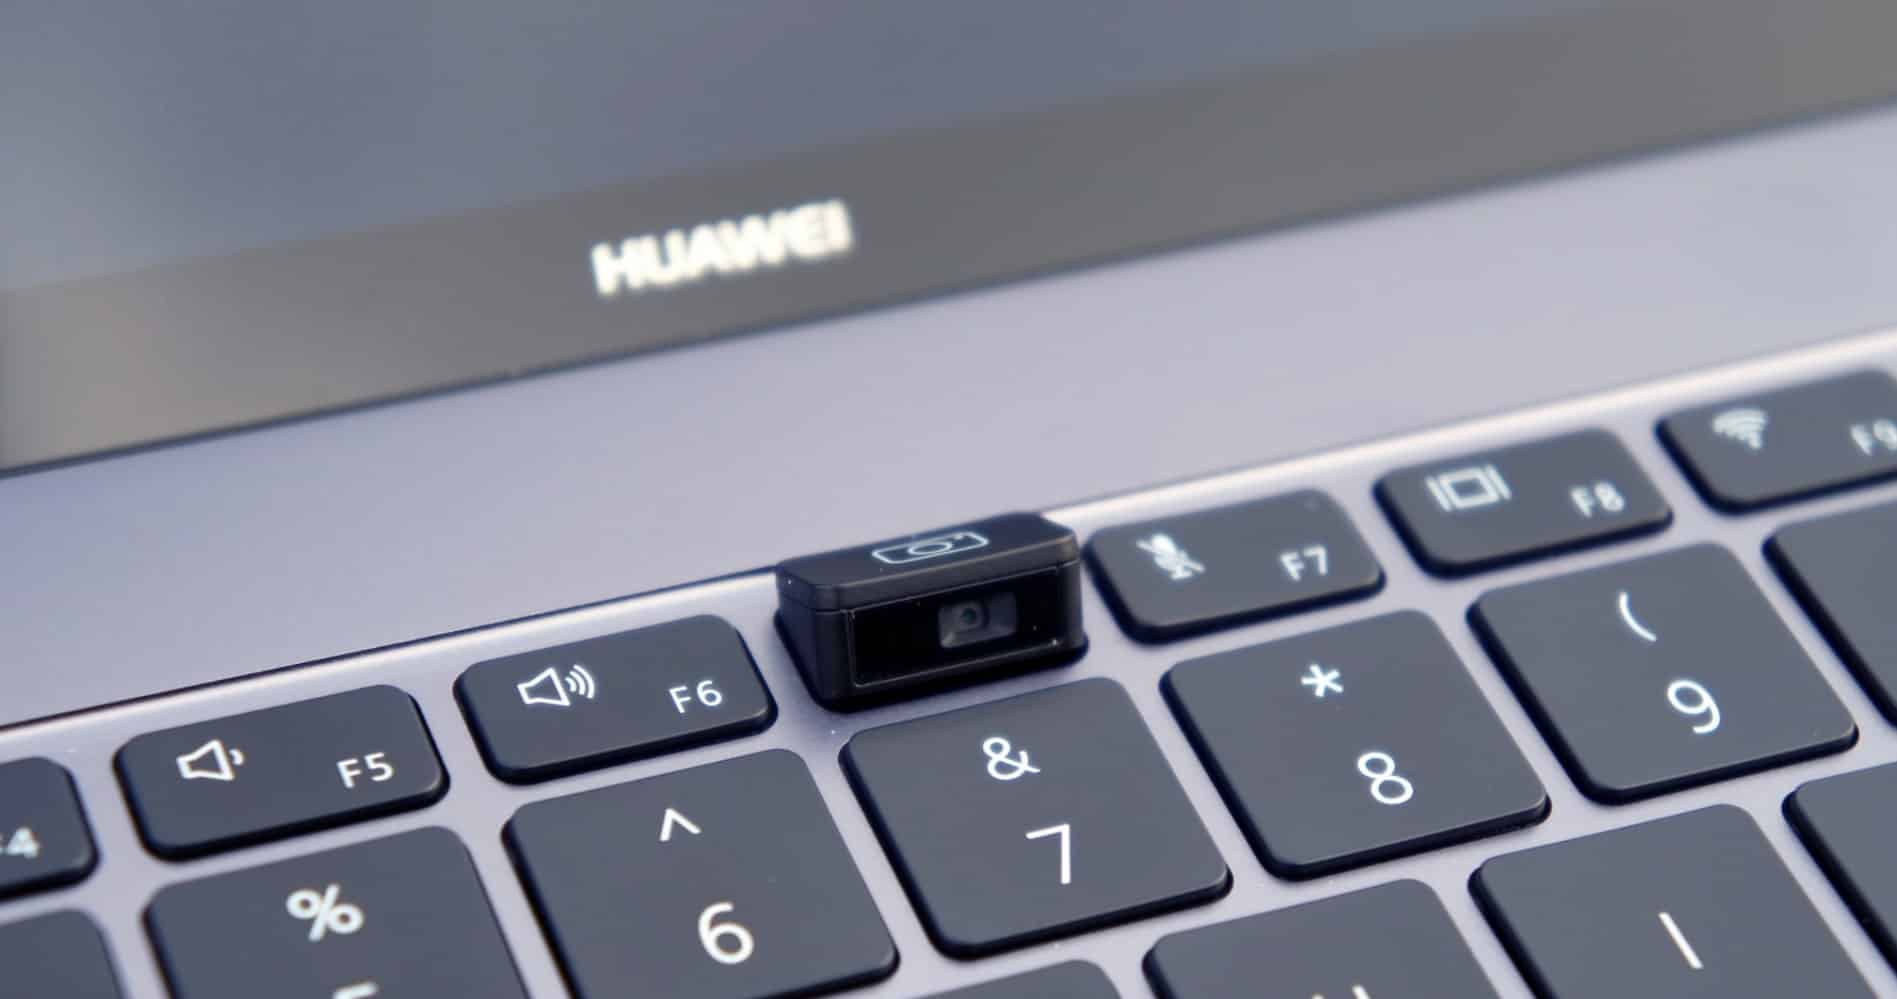 Huawei Matebook X keyboard